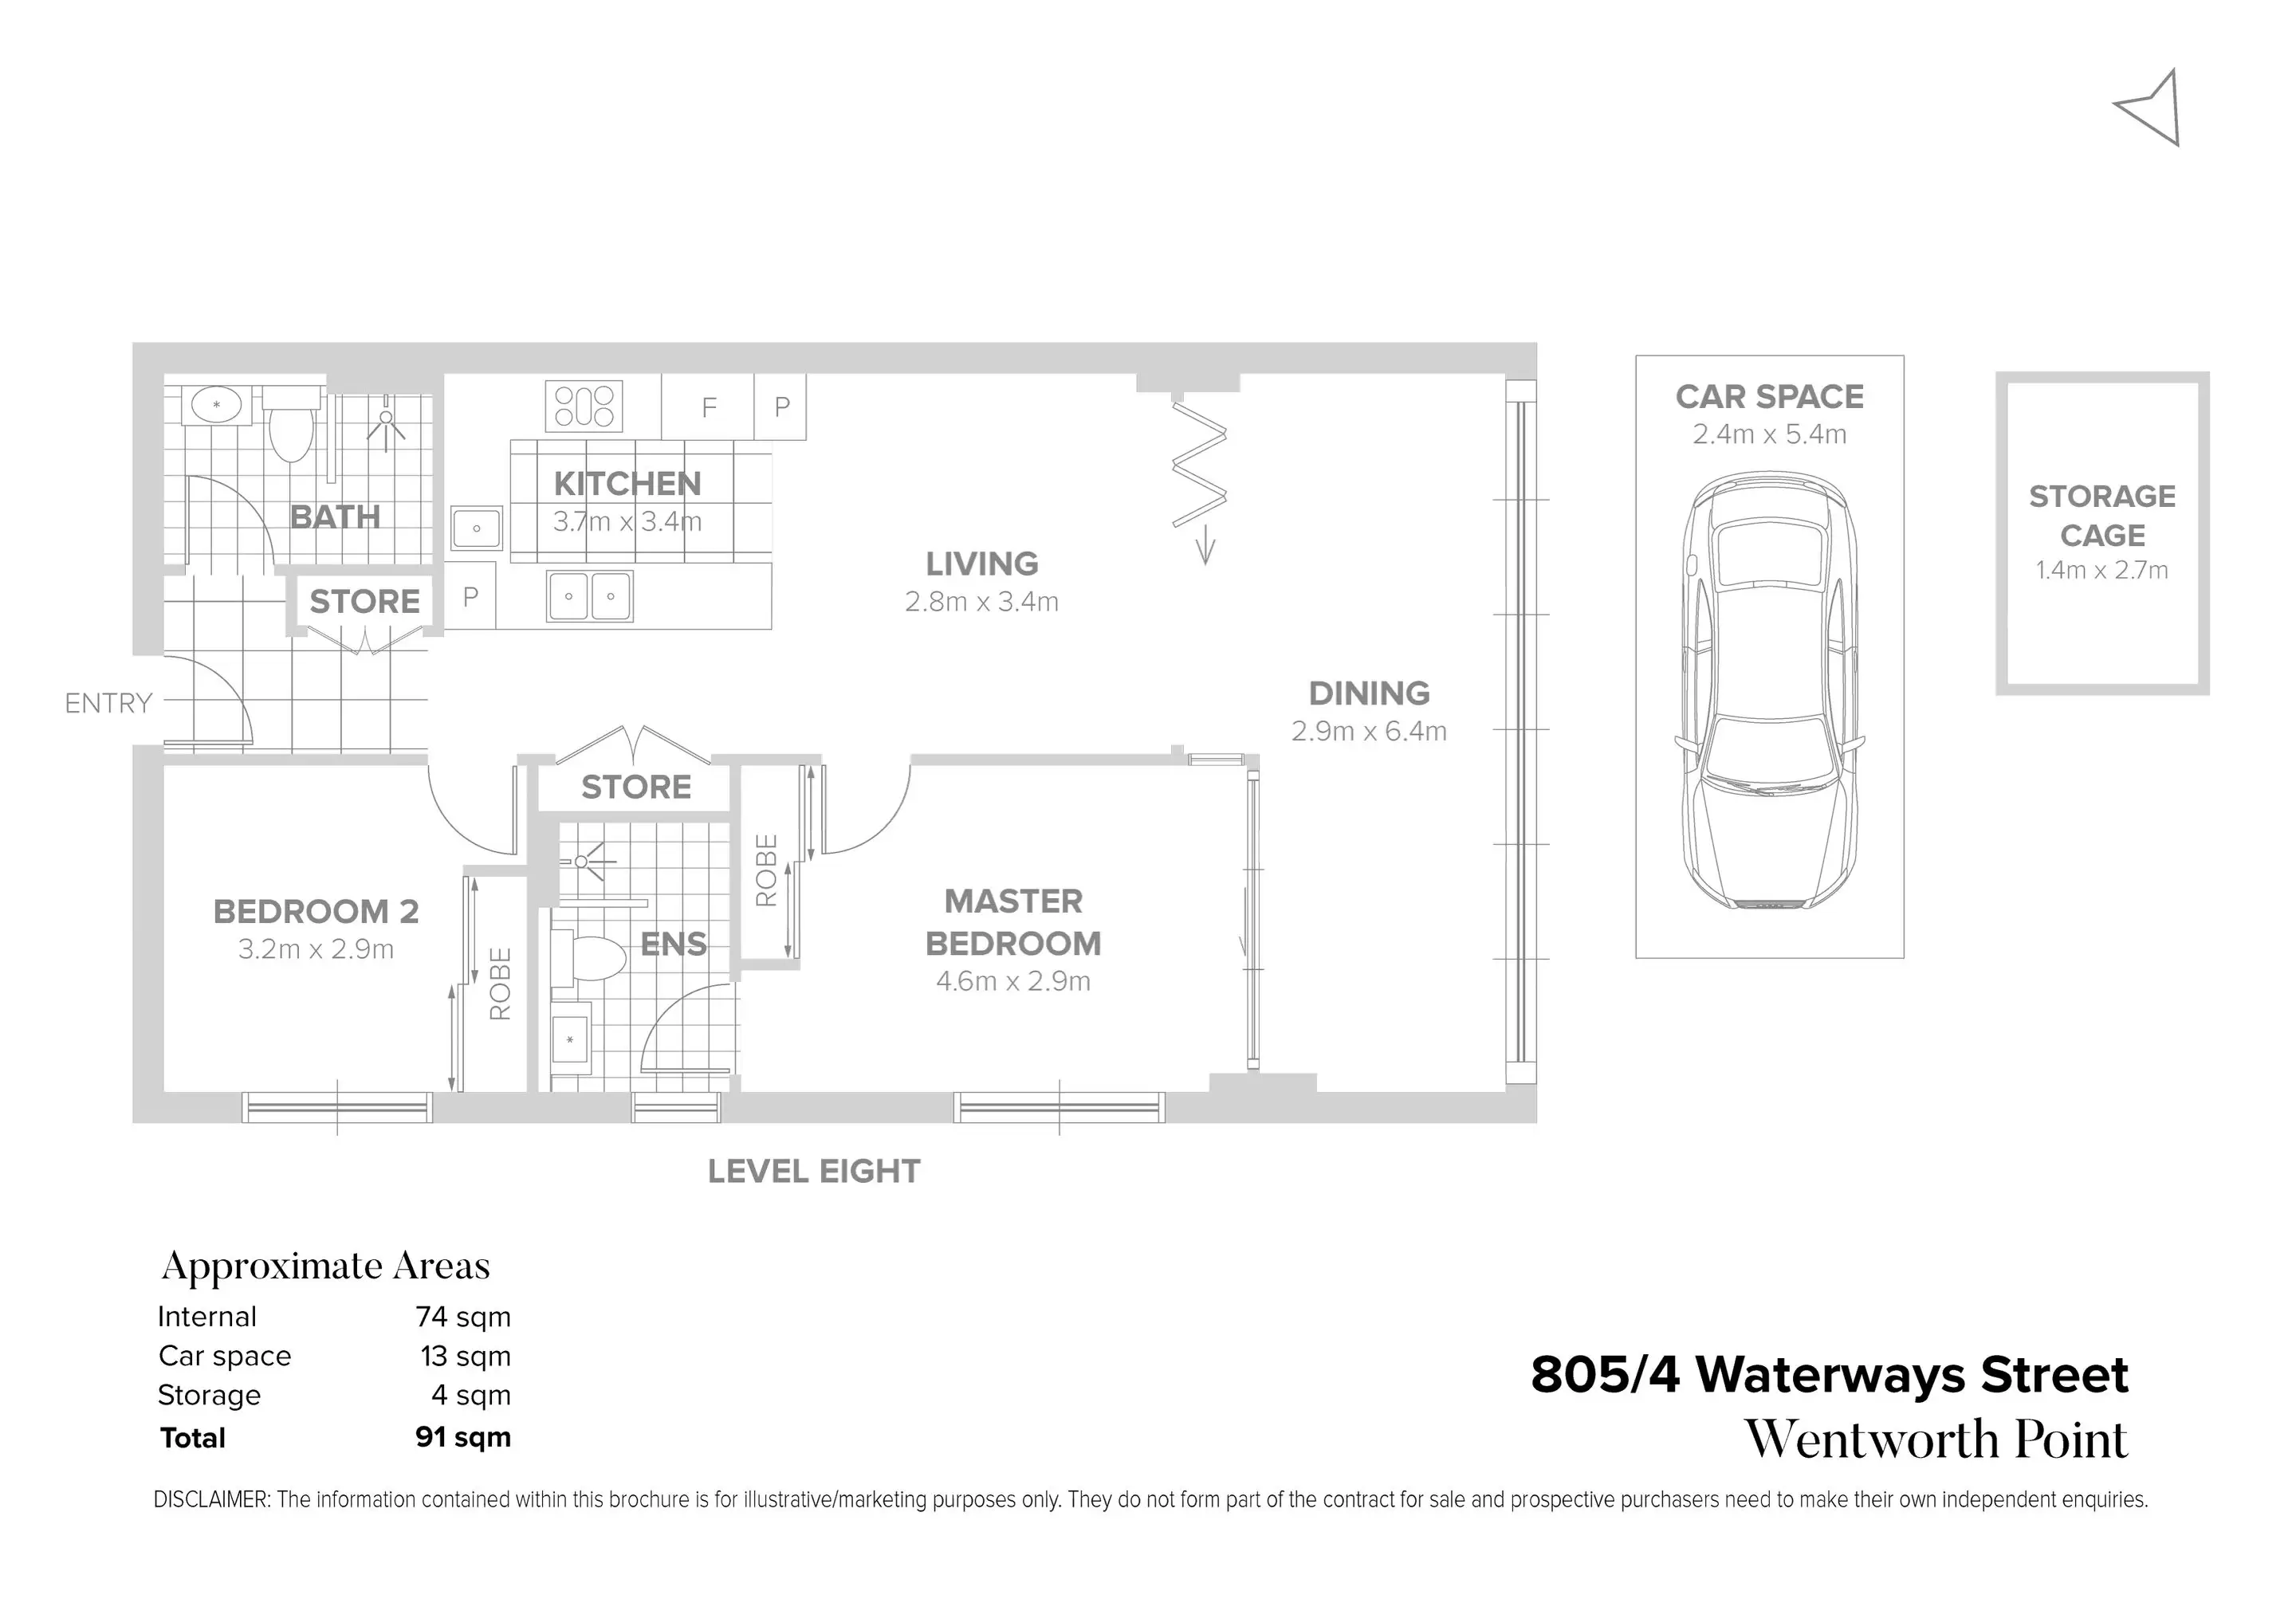 805/4 Waterways Street, Wentworth Point Sold by Chidiac Realty - floorplan